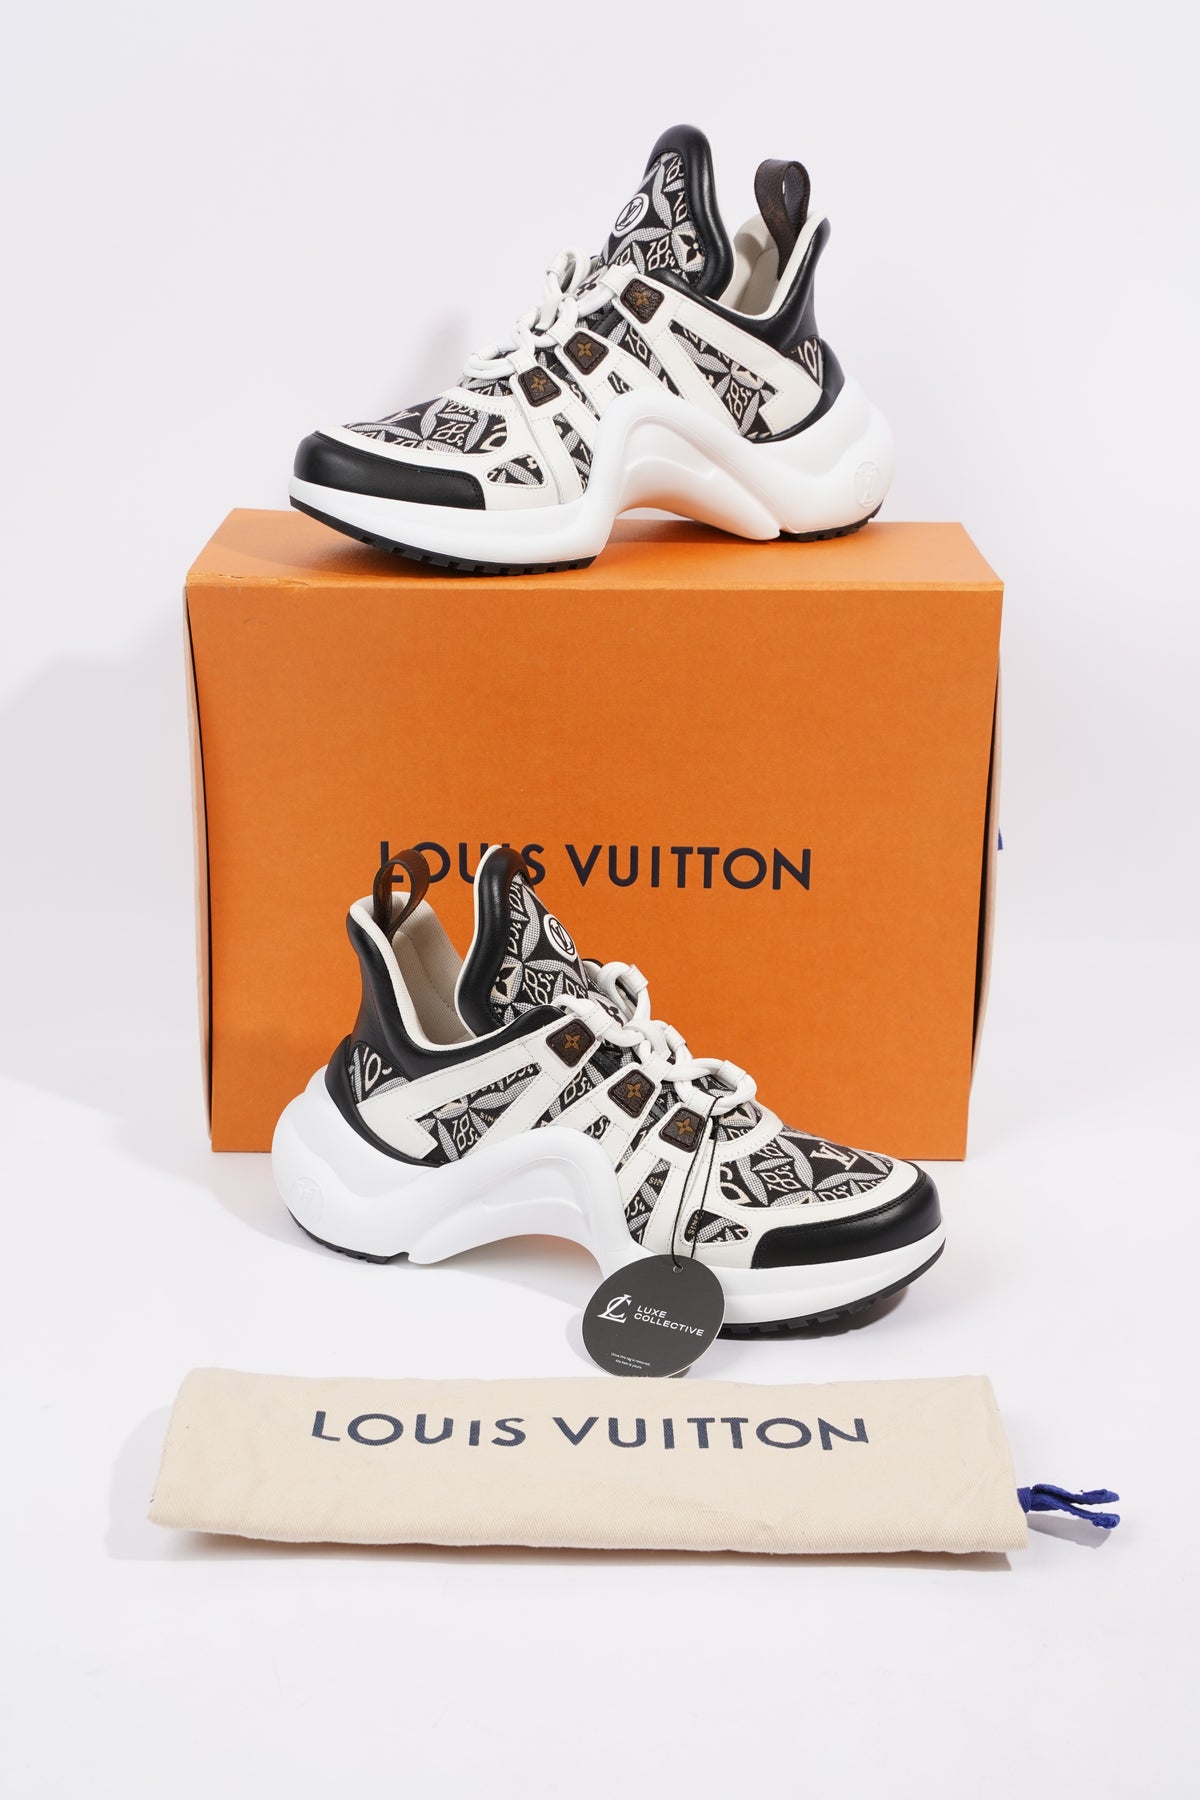 Louis Vuitton Archlight Women's Sneakers 1854 